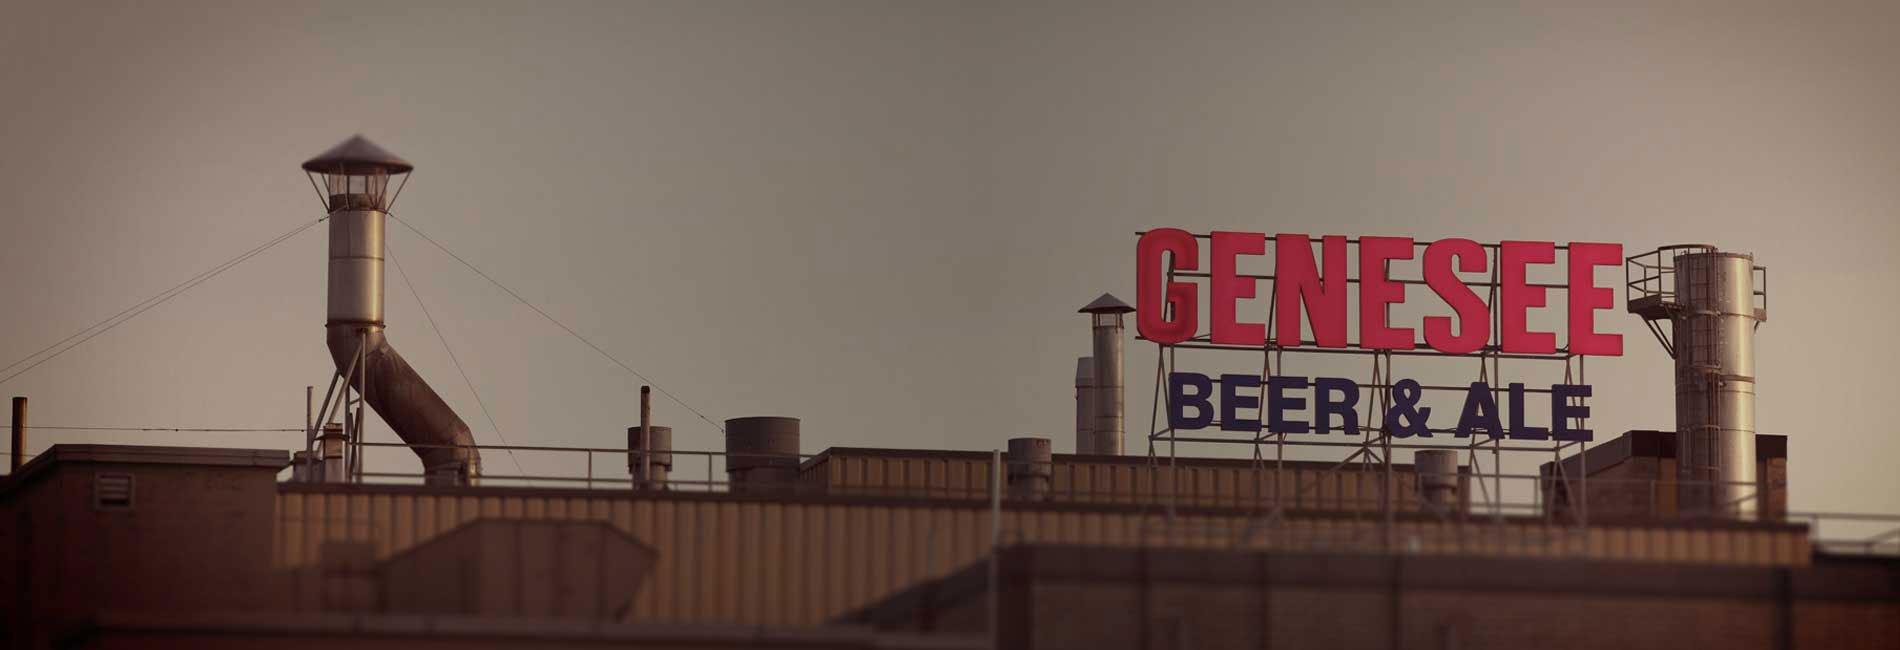 Genesee Brewery Sign